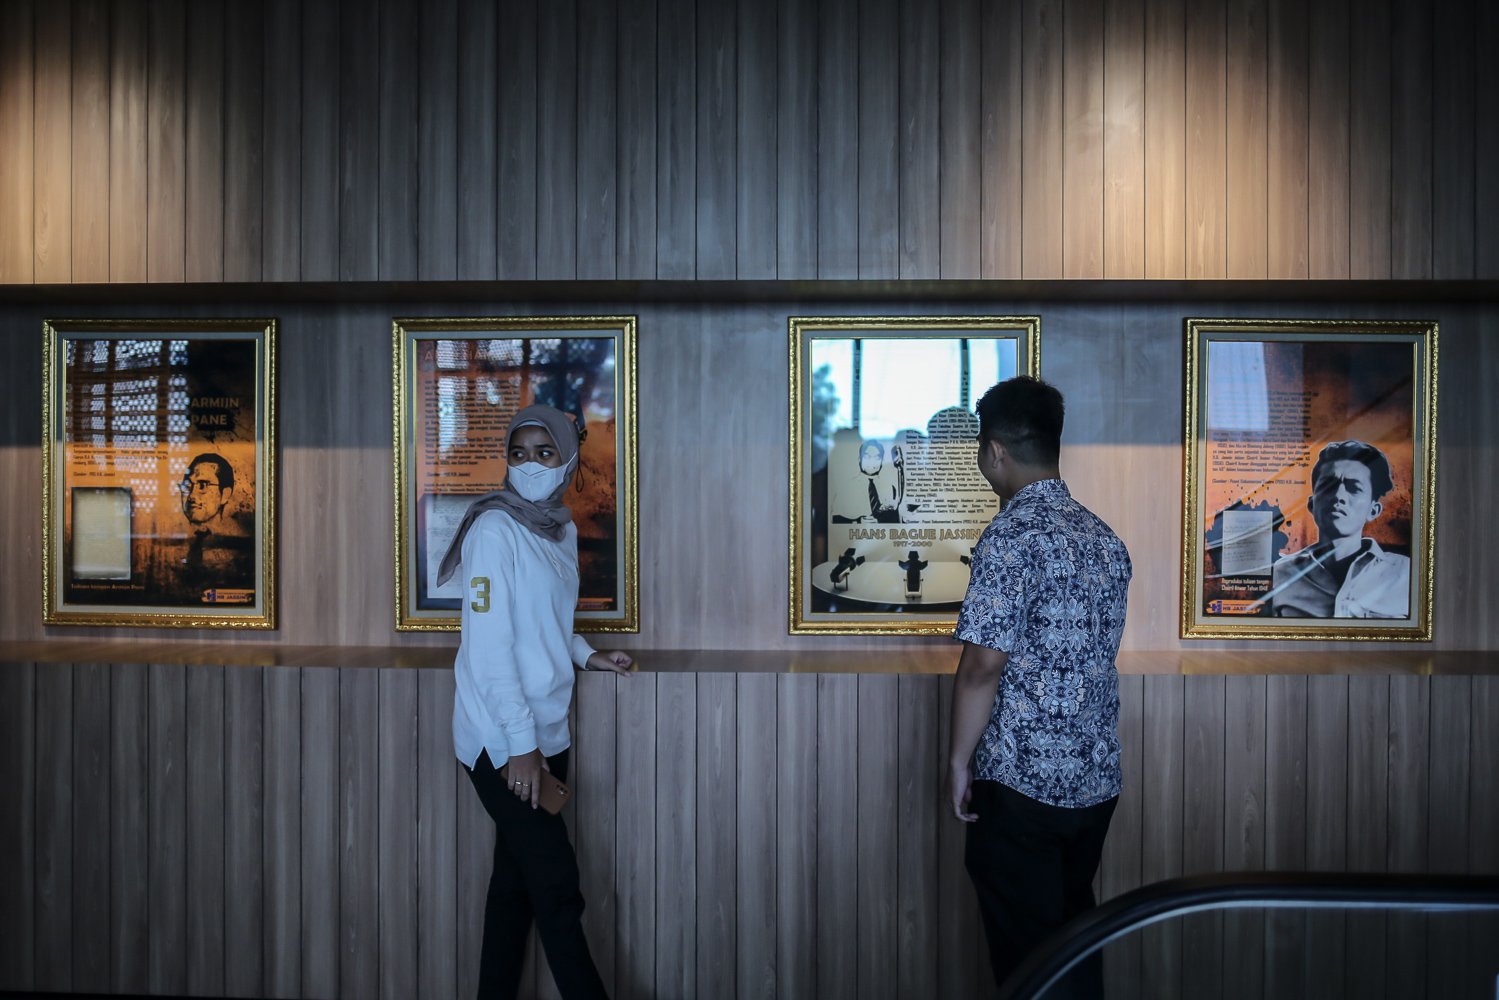 Pengunjung melihat koleksi puisi di Perpustakaan Umum Daerah Provinsi DKI Jakarta, Taman Ismail Marzuki, Cikini, Jakarta, Kamis (30/6). TIM kini hadir dengan wajah baru dan telah dibuka untuk publik secara bertahap mulai tanggal 3 Juni 2022 serta direcanakan pada awal bulan Juli 2022 Pusat Kesenian Jakarta ini akan diresmikan.